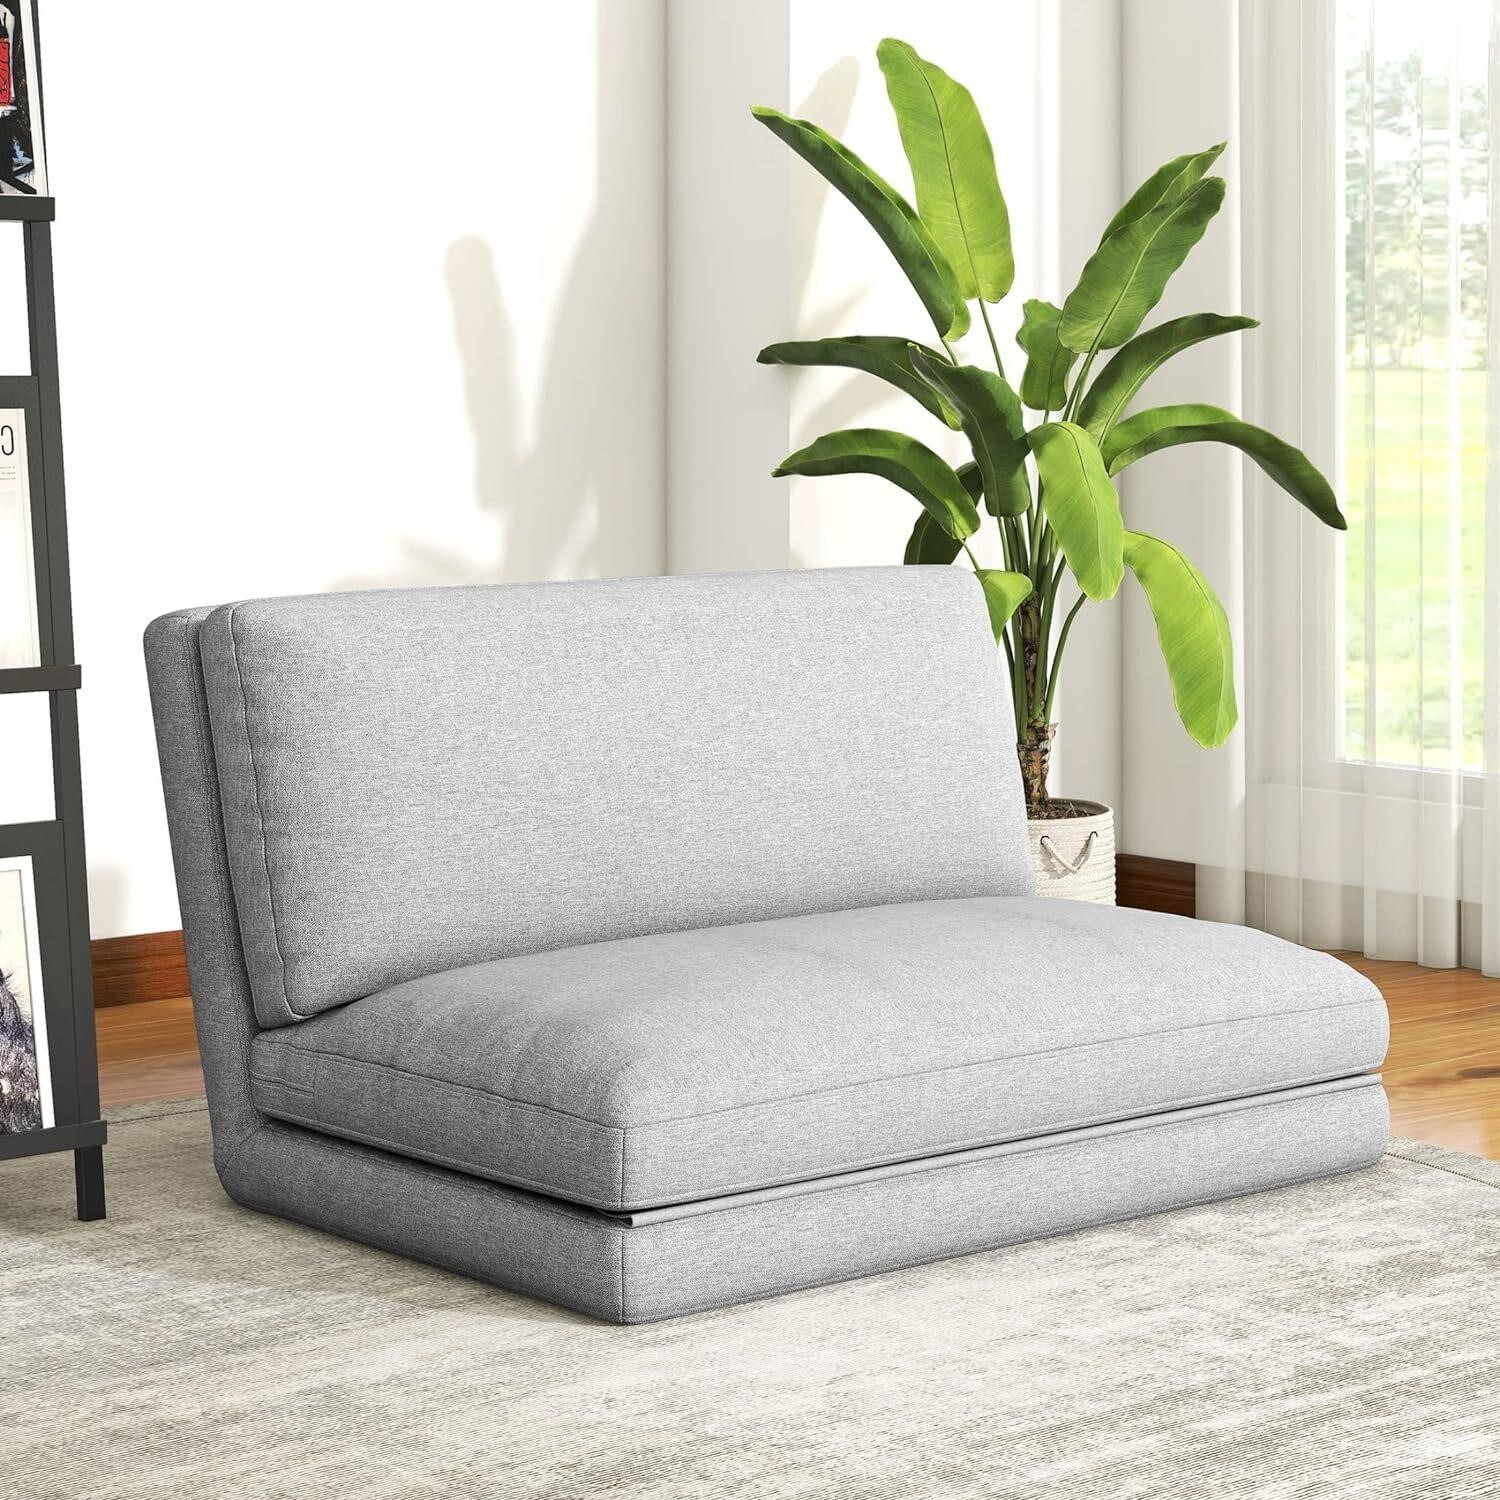 LIFERECORD Convertible Futon Sofa Bed  Grey